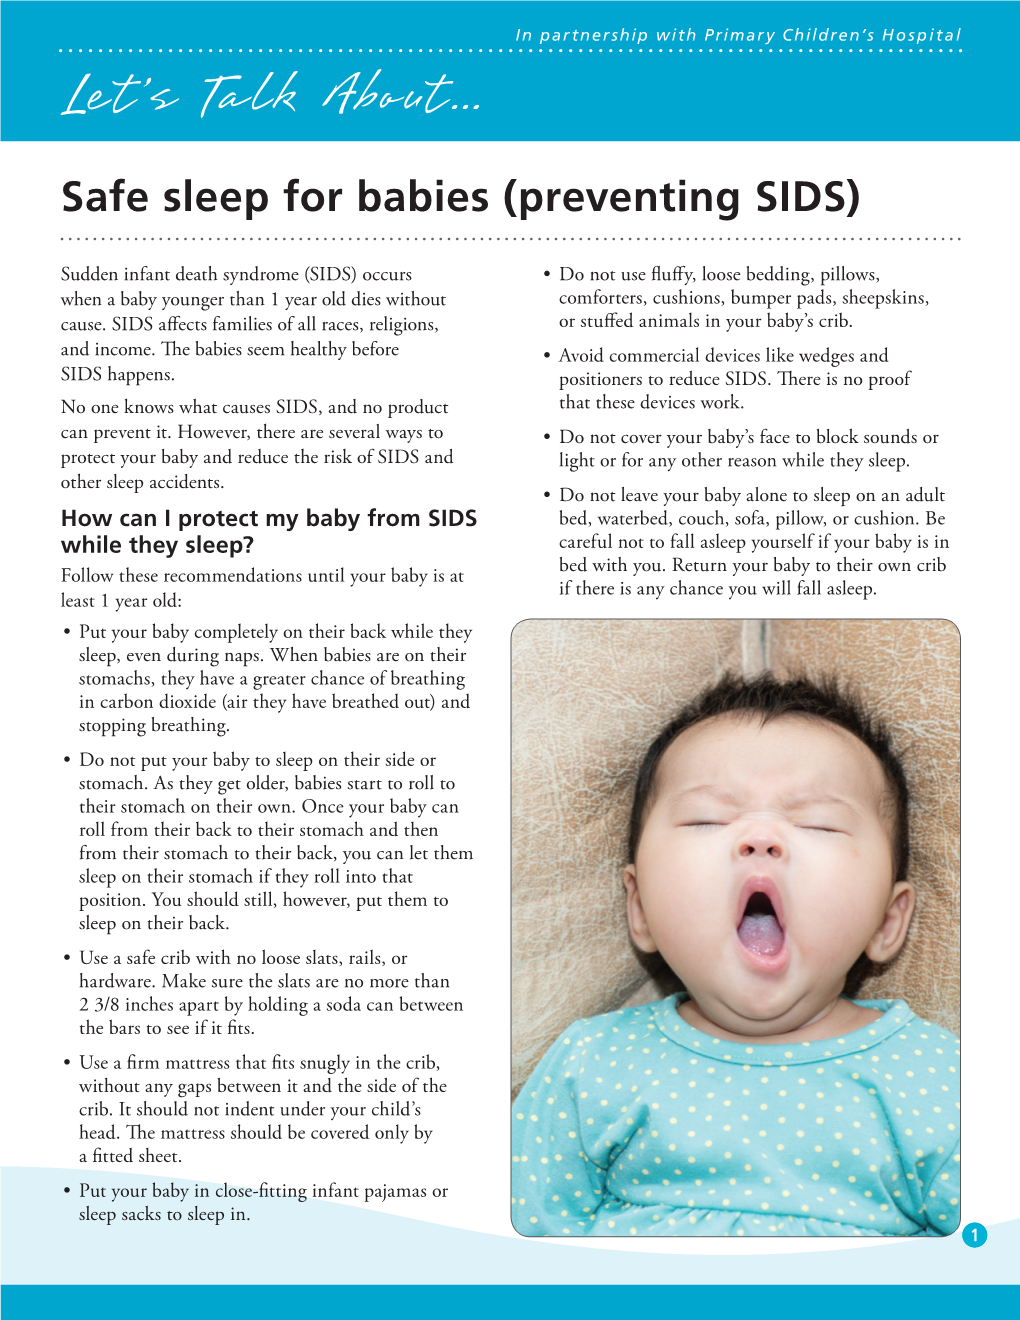 Safe Sleep for Babies (Preventing SIDS)